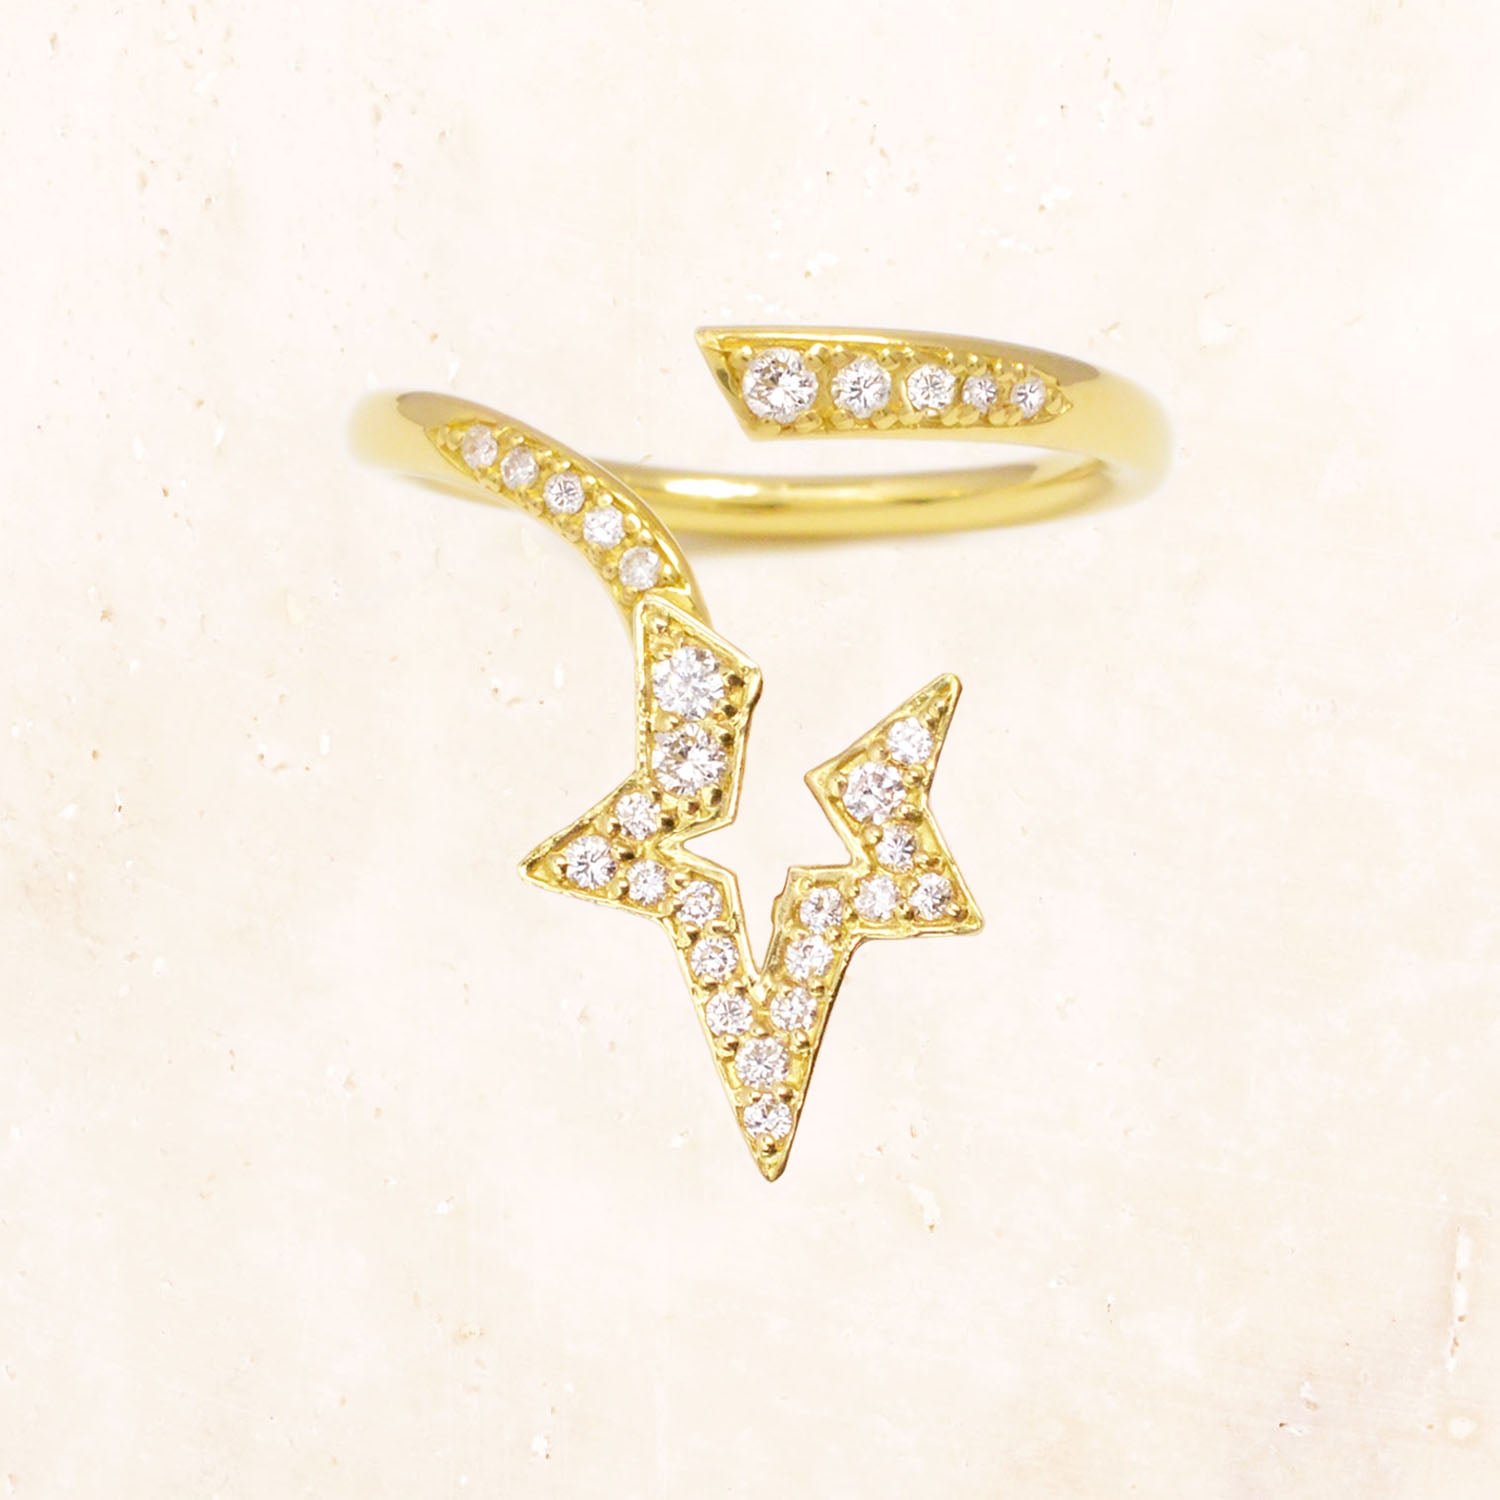 18K金不規則星型鑽石戒指